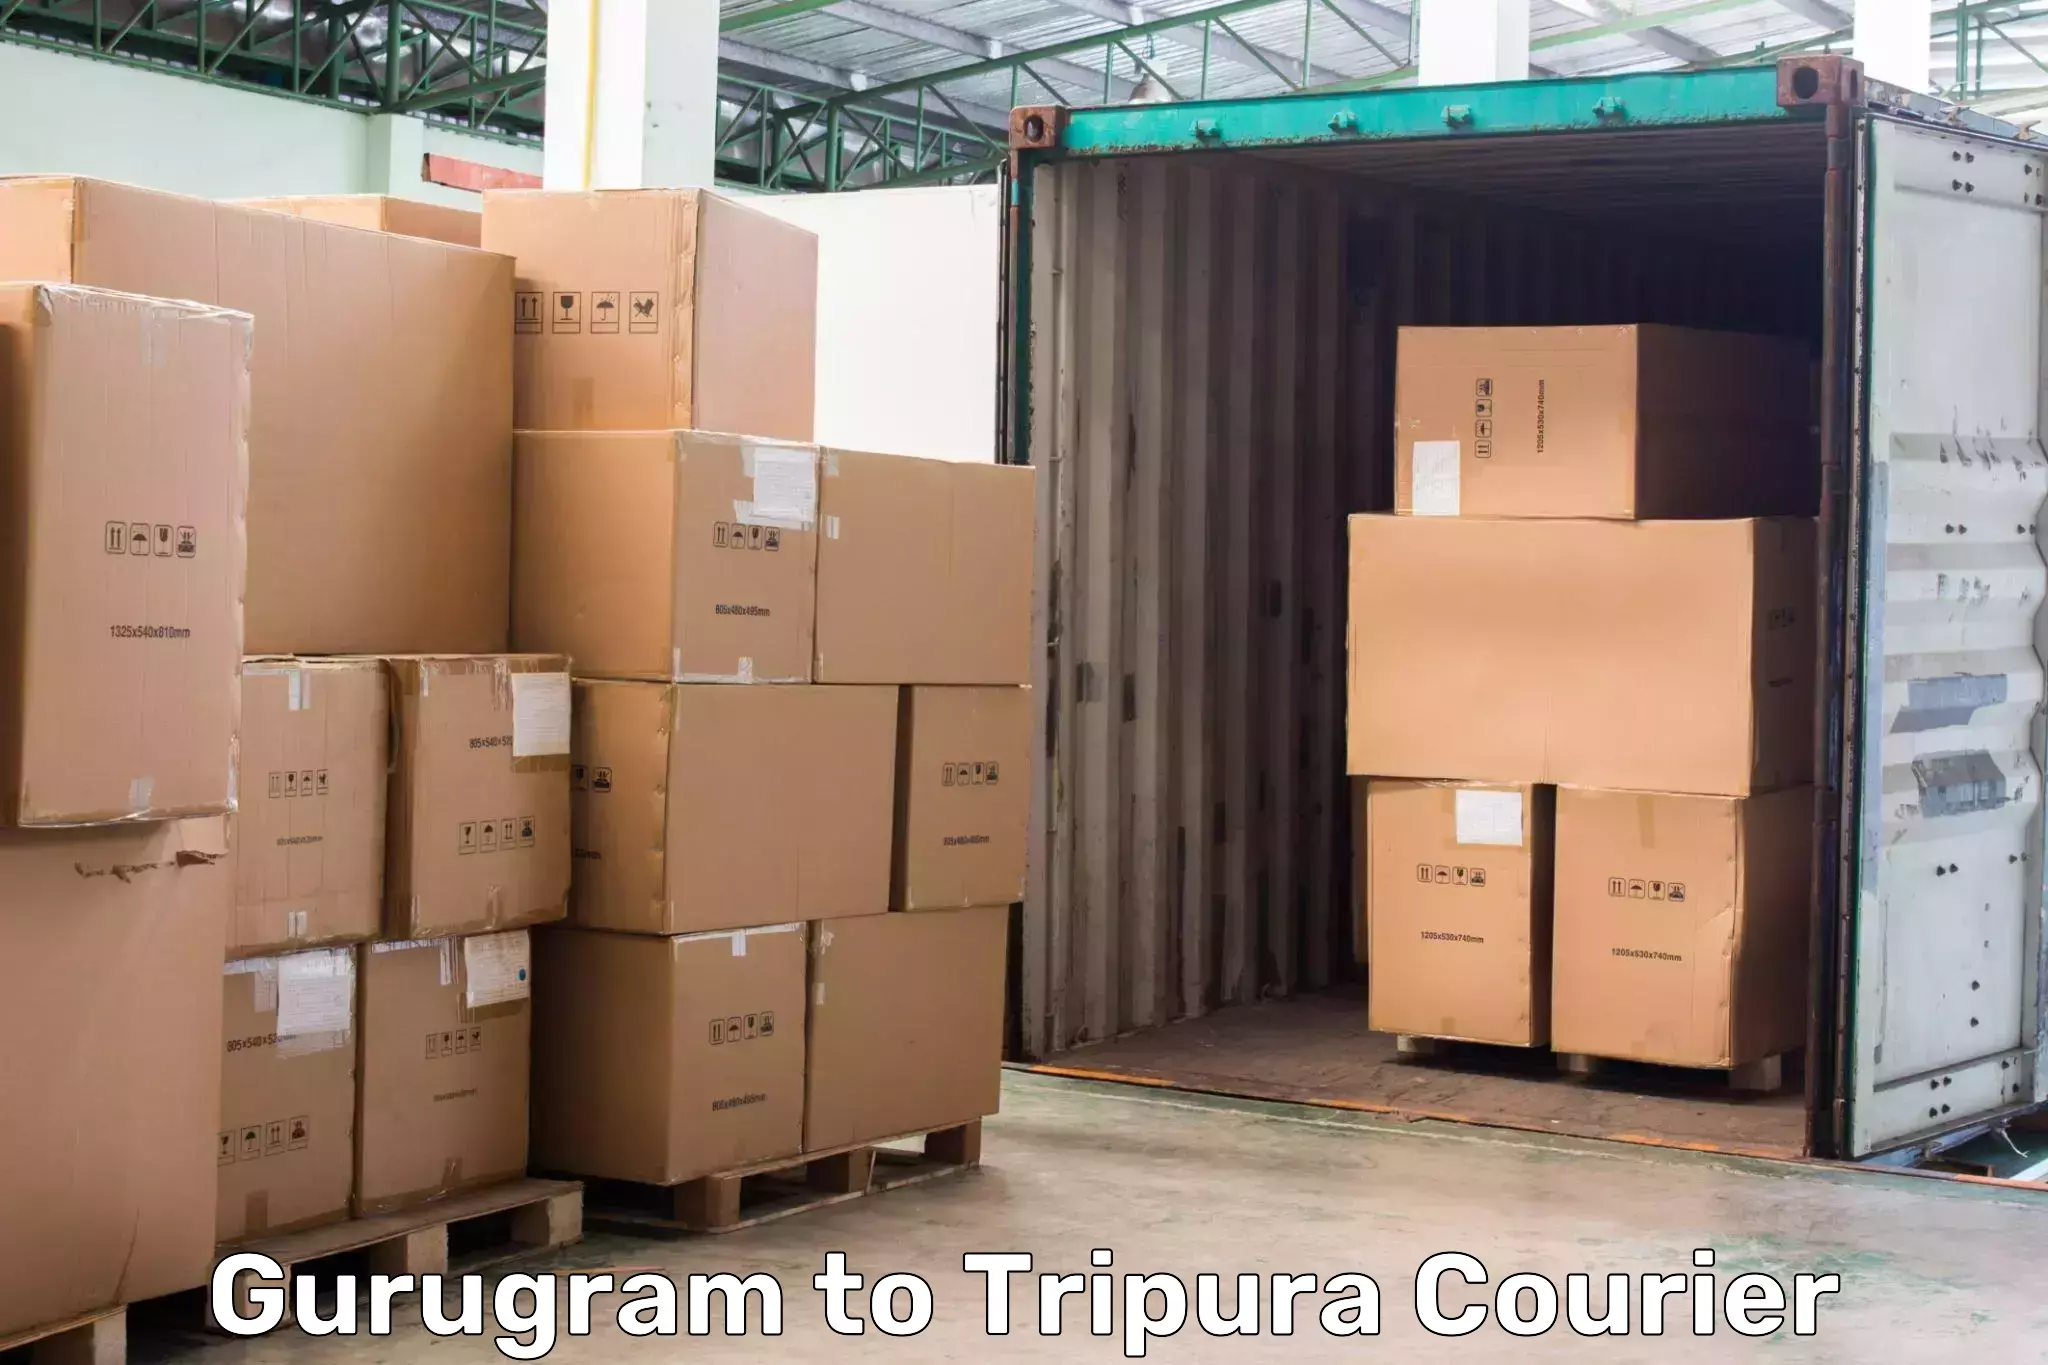 Courier service innovation Gurugram to Udaipur Tripura